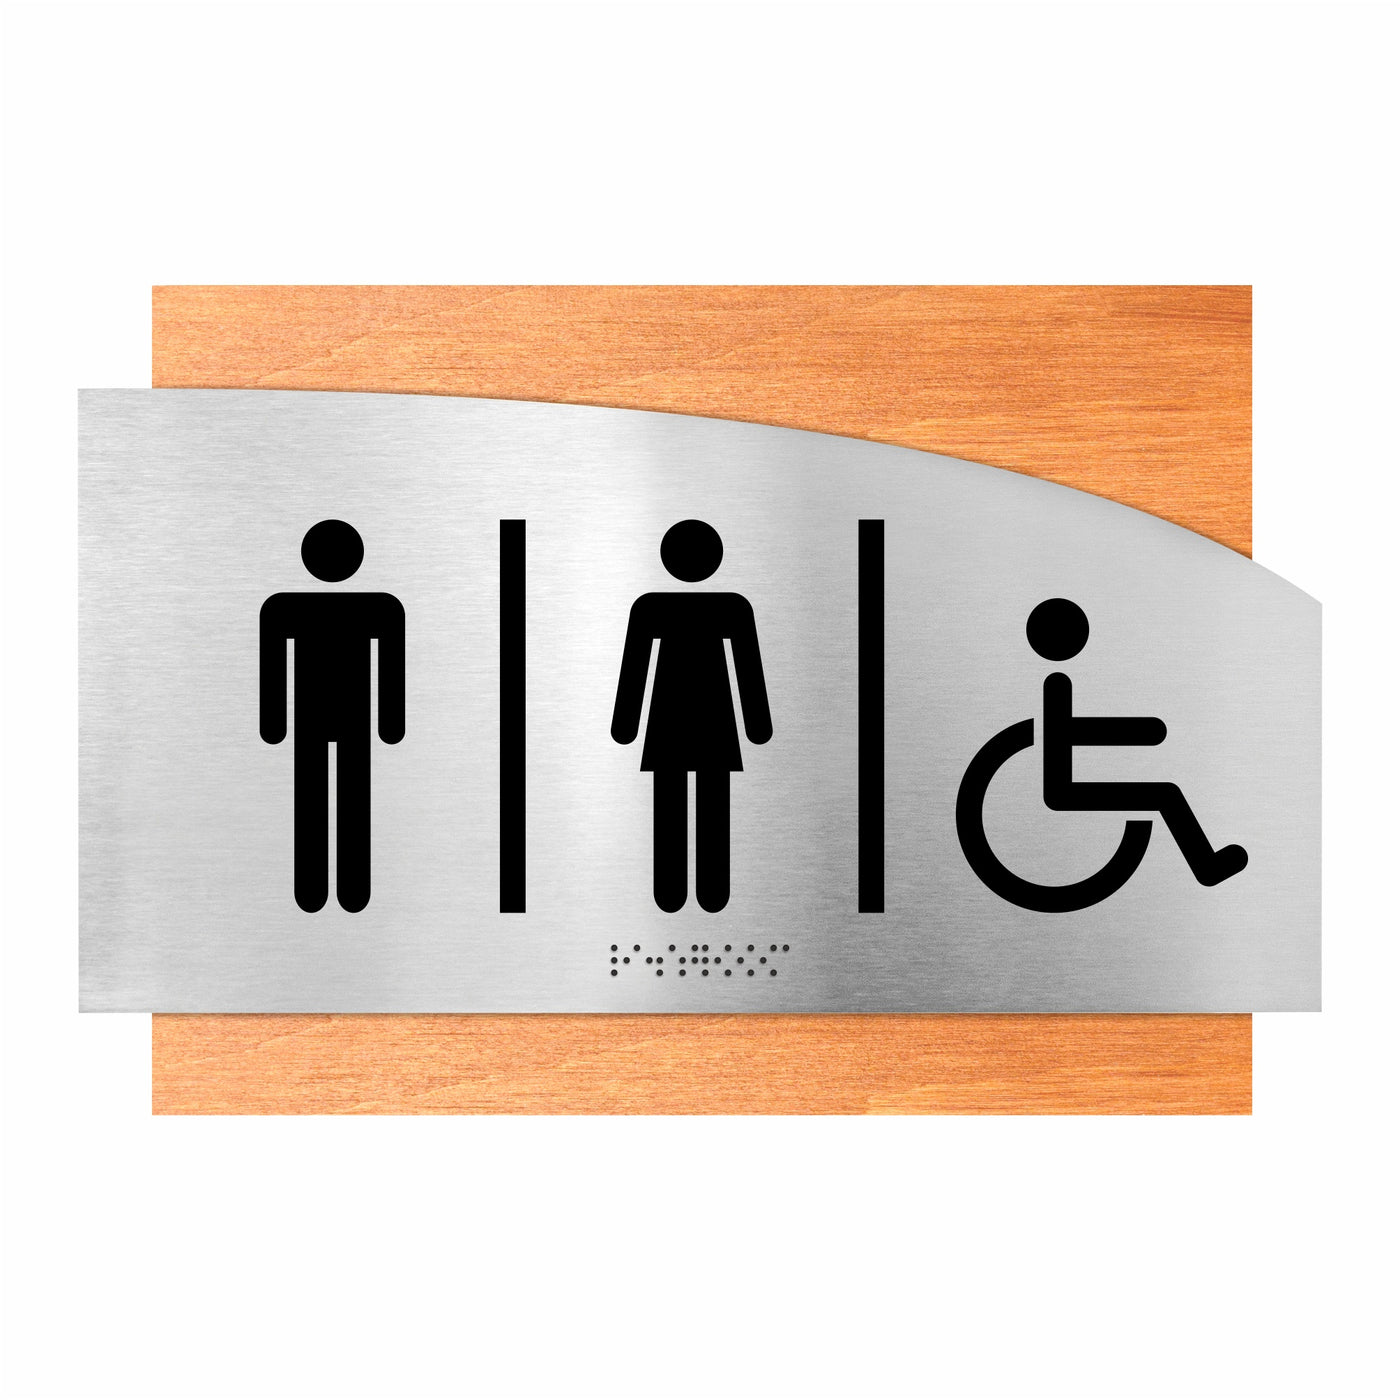 Wooden Unisex Bathroom Sign "Wave" Design